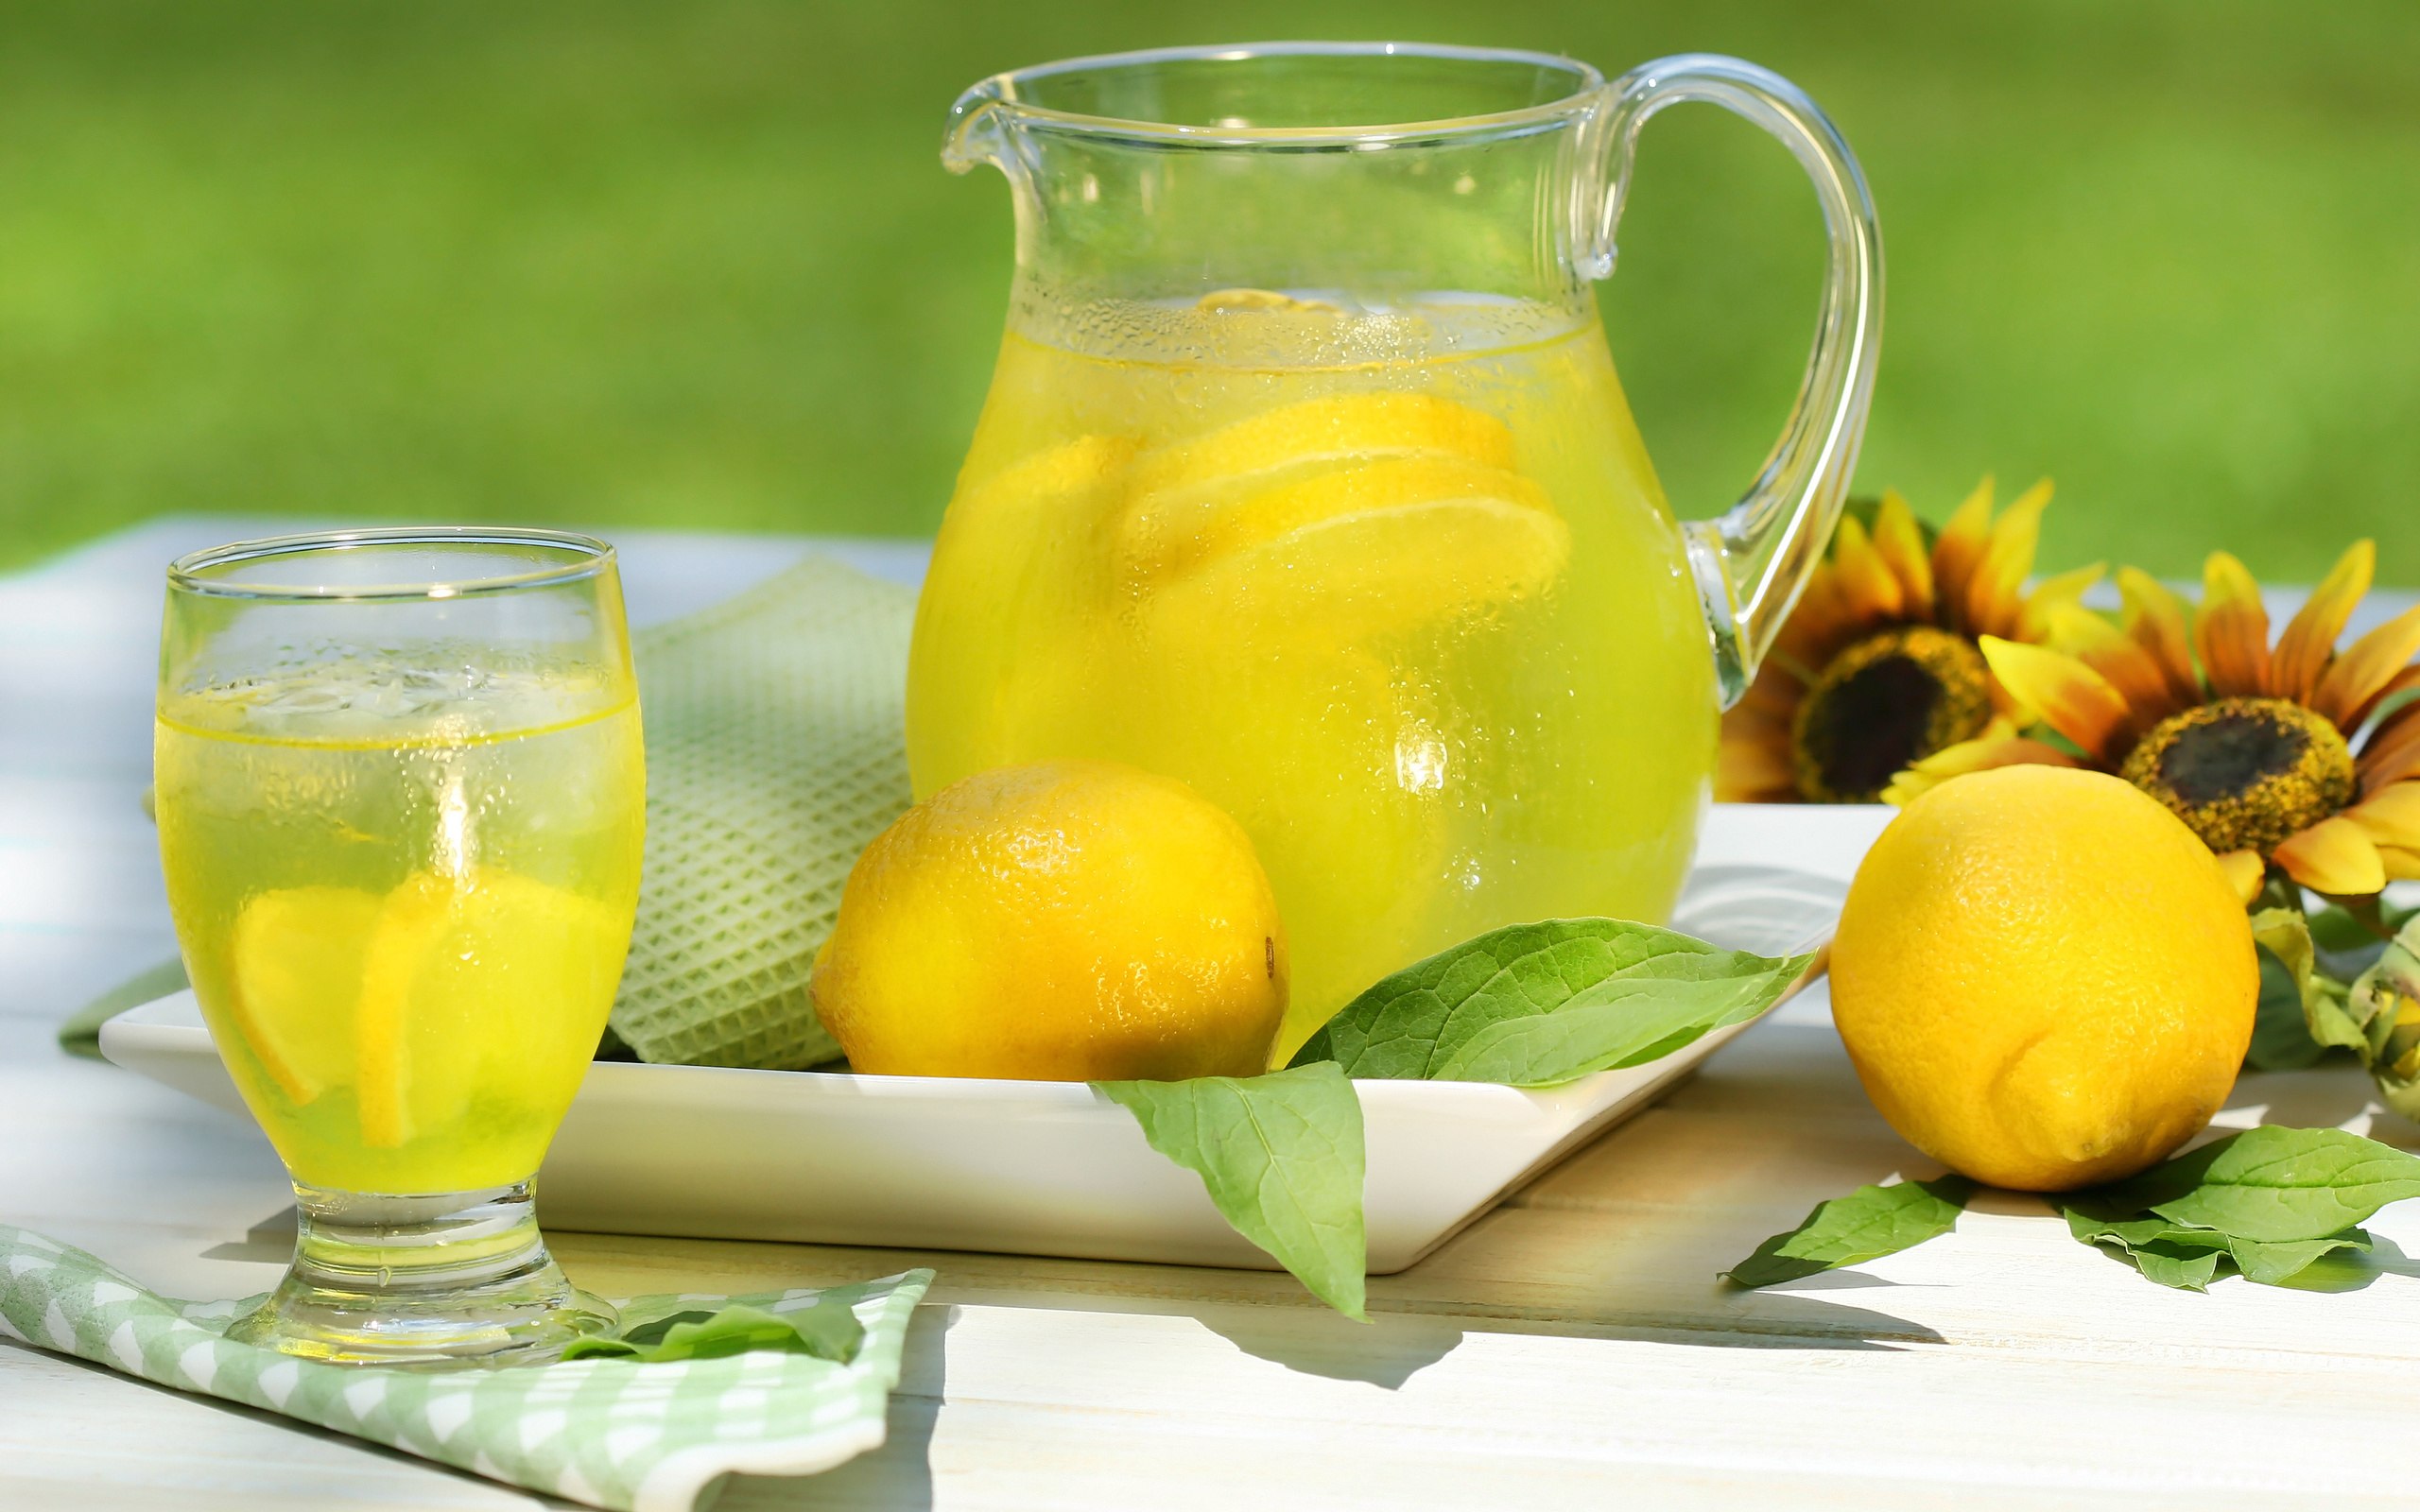 How to make healthy and fresh lemonade